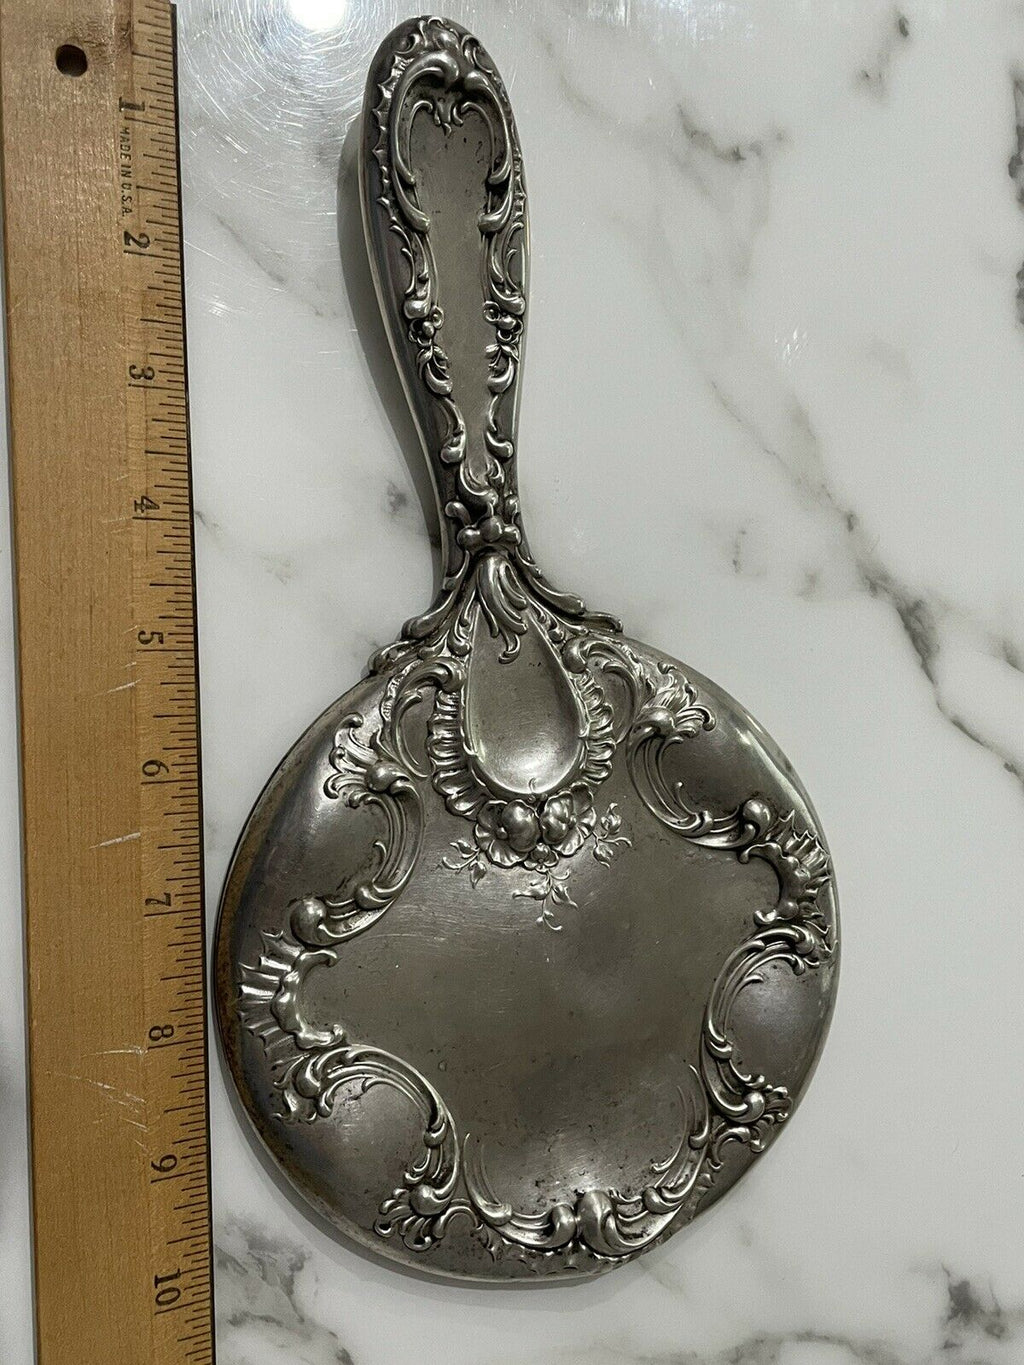 Antique Art Nouveau Sterling Silver International Vanity Hand Mirror C1910